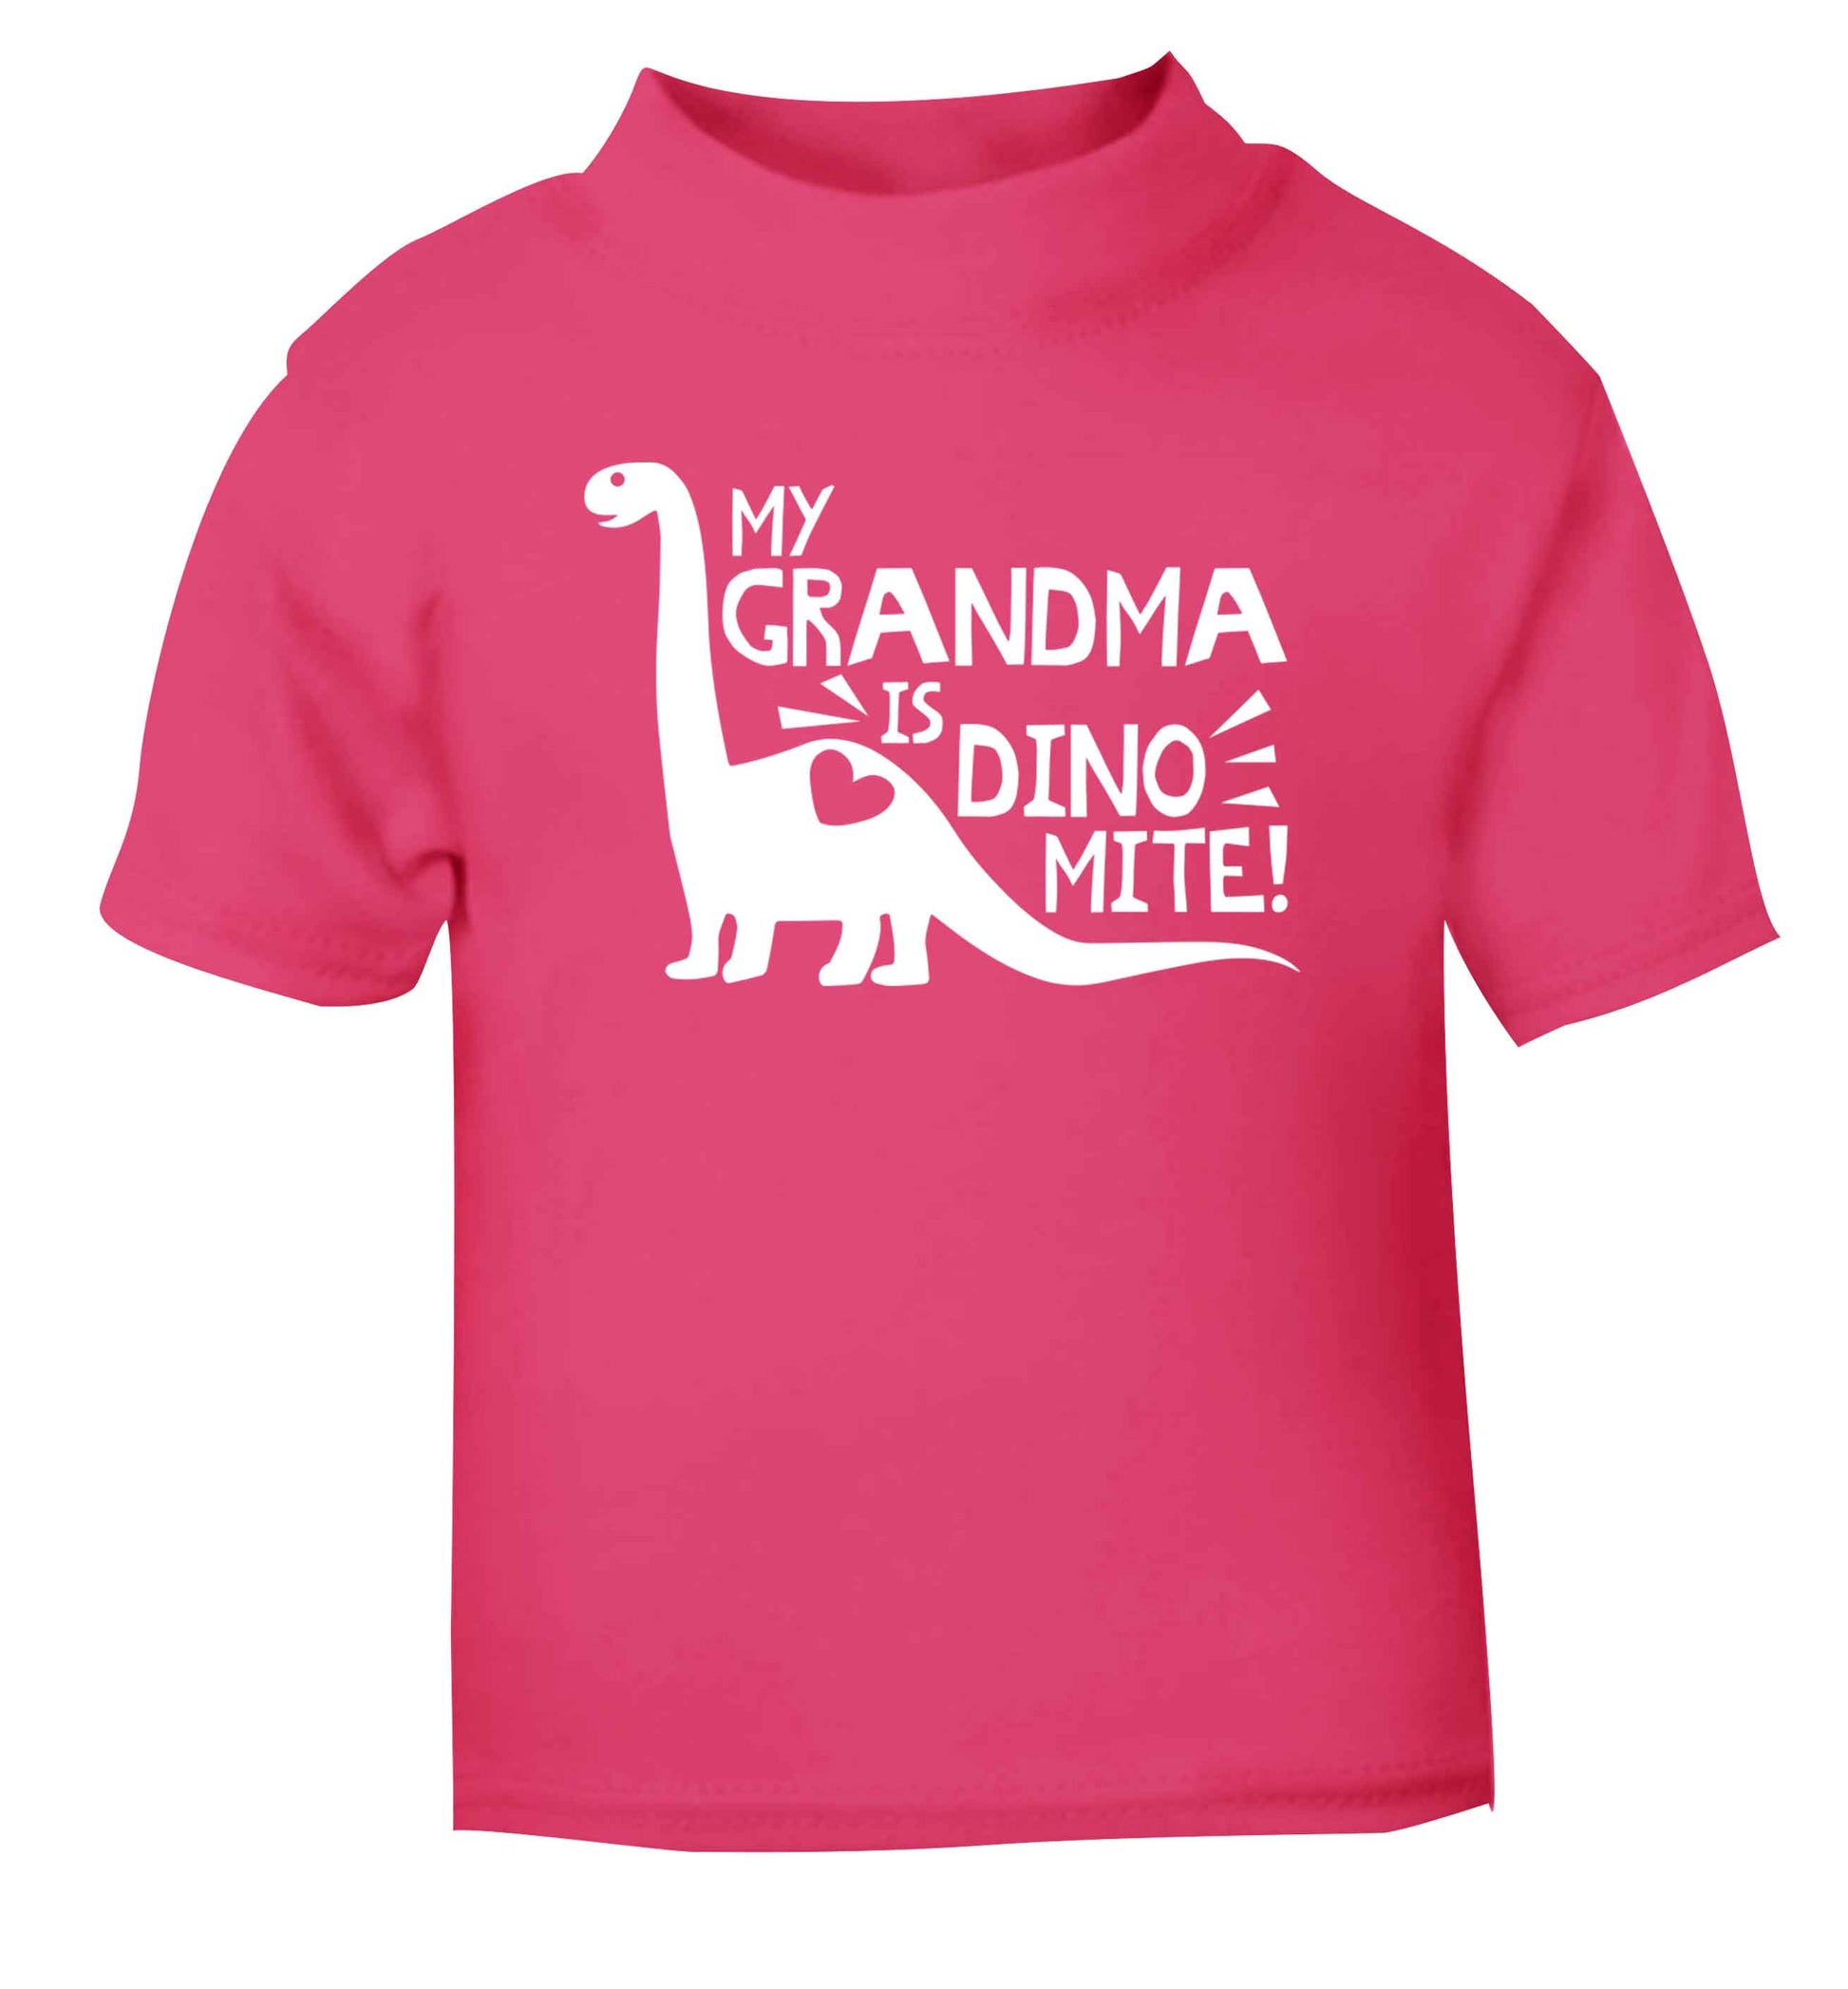 My grandma is dinomite! pink Baby Toddler Tshirt 2 Years